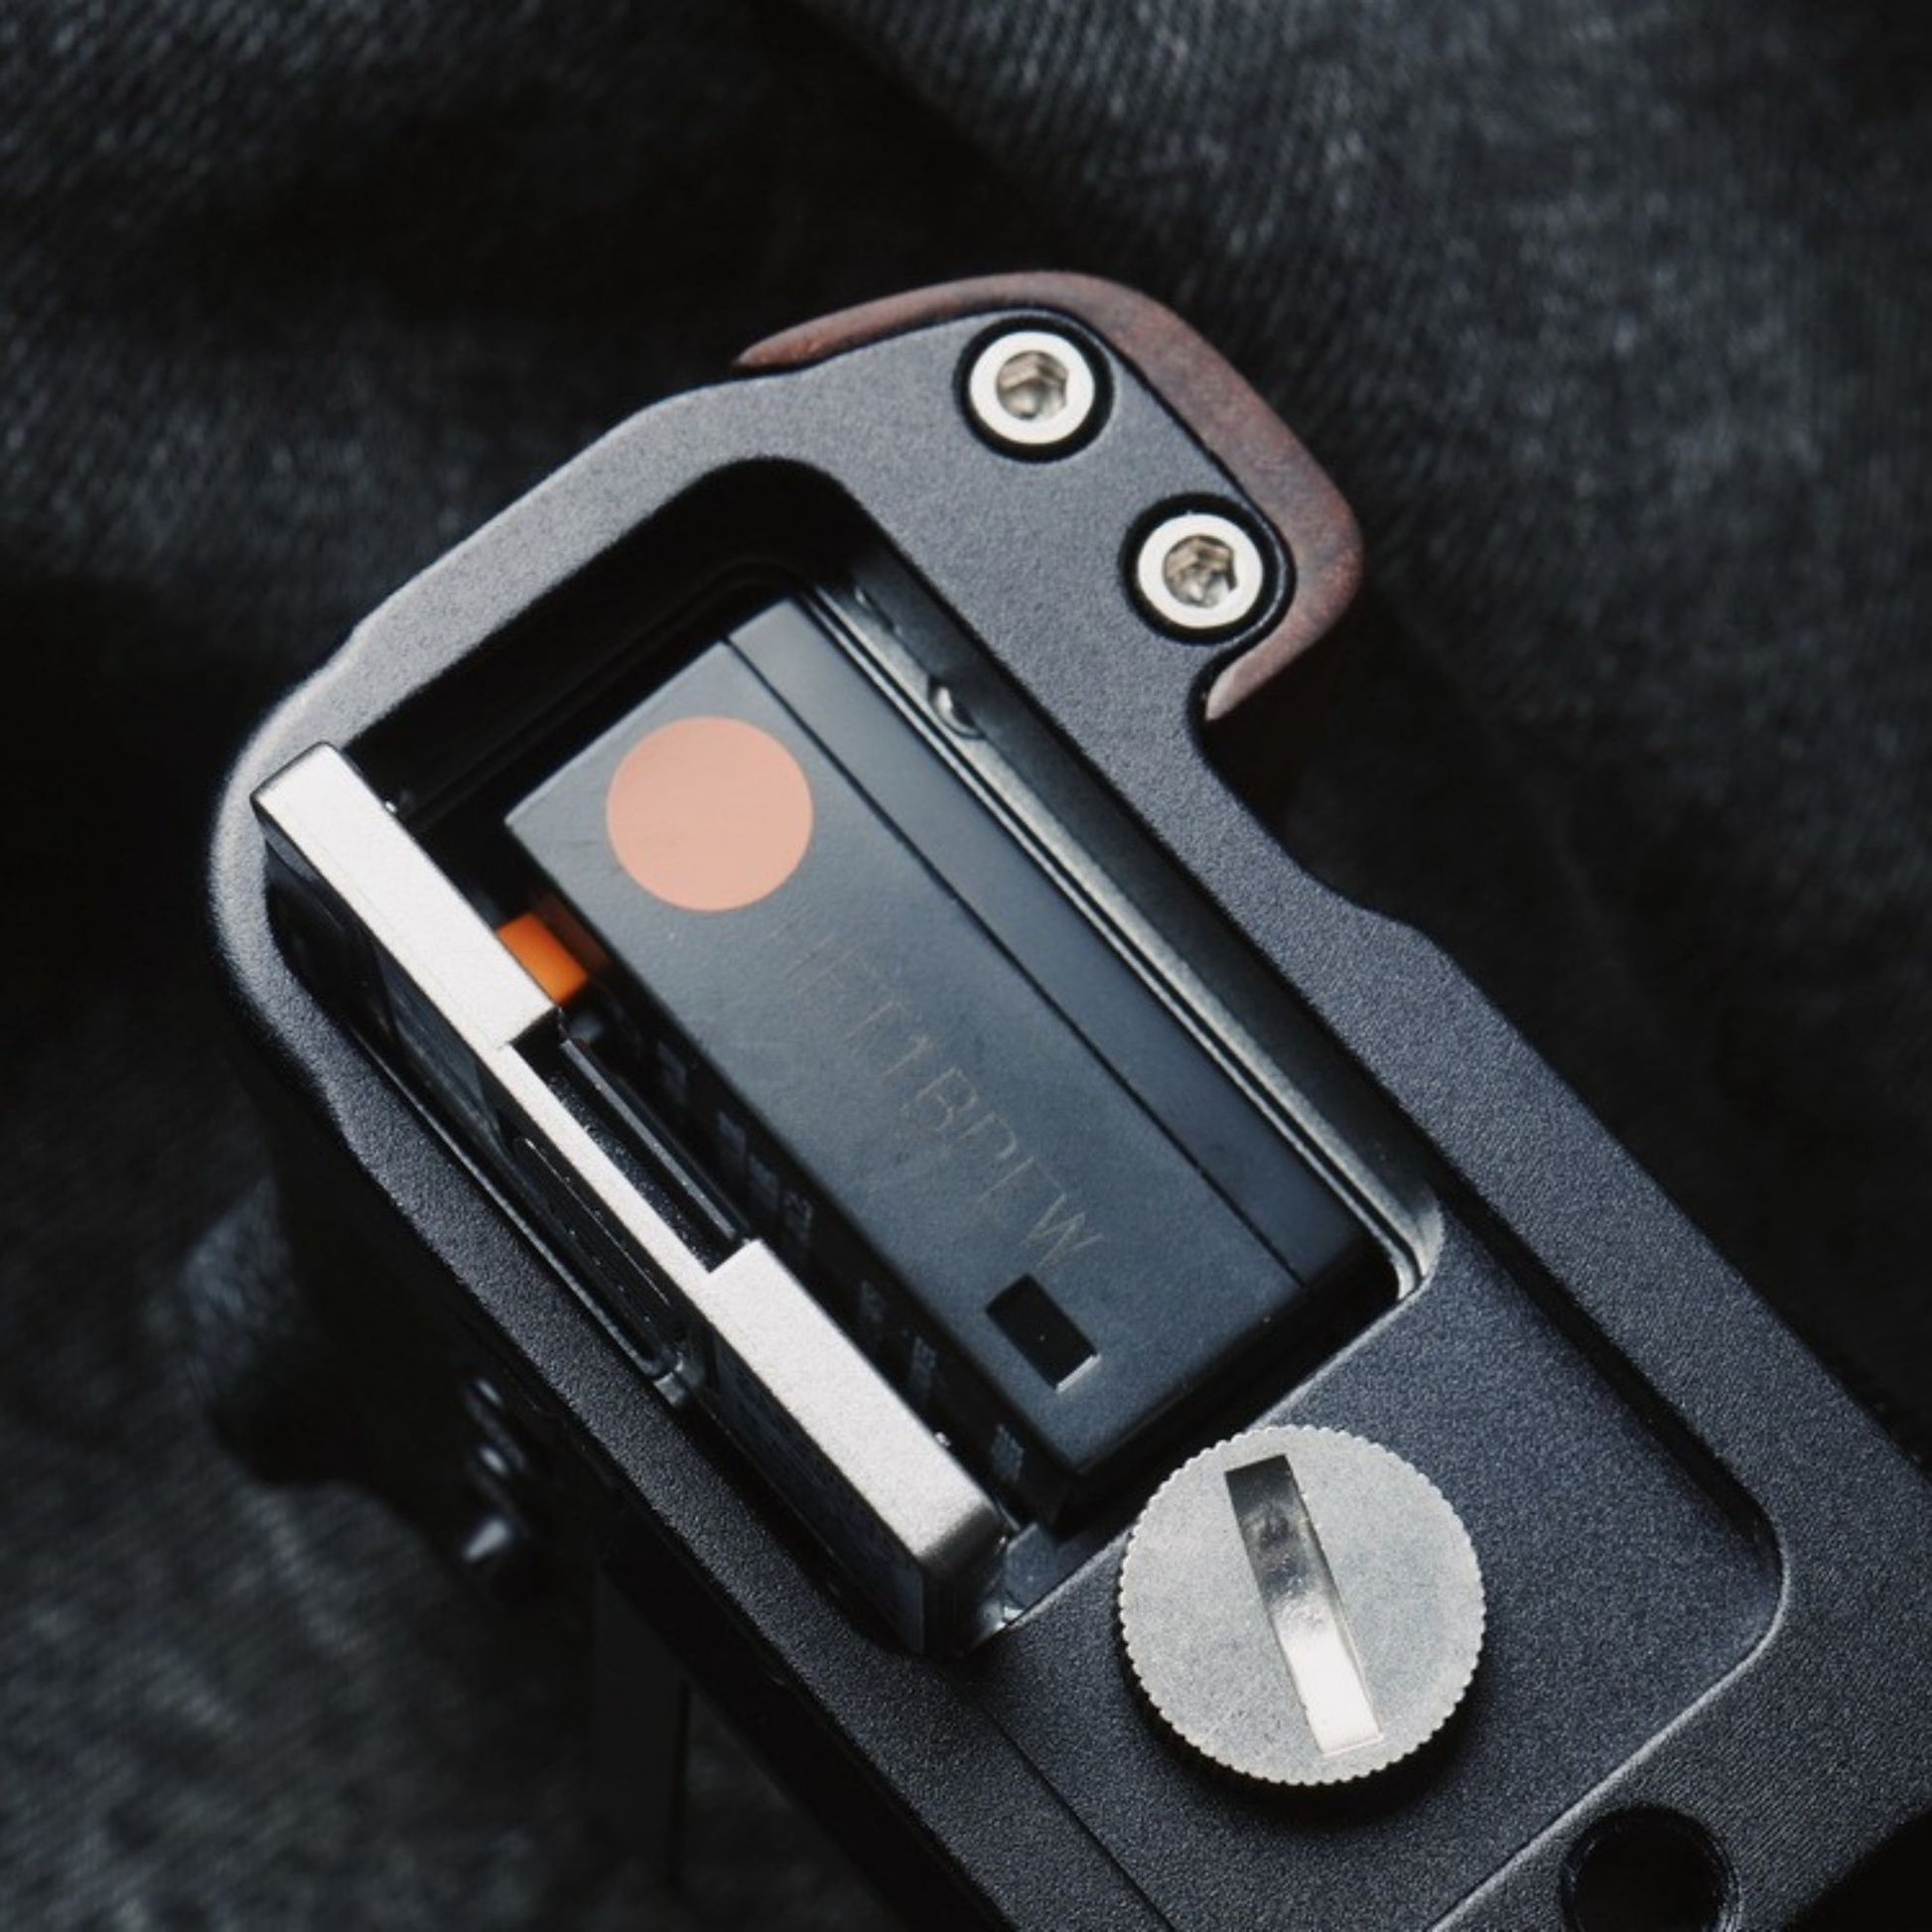 Fuji X-T30, X-T20 wooden hand grip with tripod mount, camera hand grip, Fujifilm X-T30 II lightweight handgrip, photographer gift